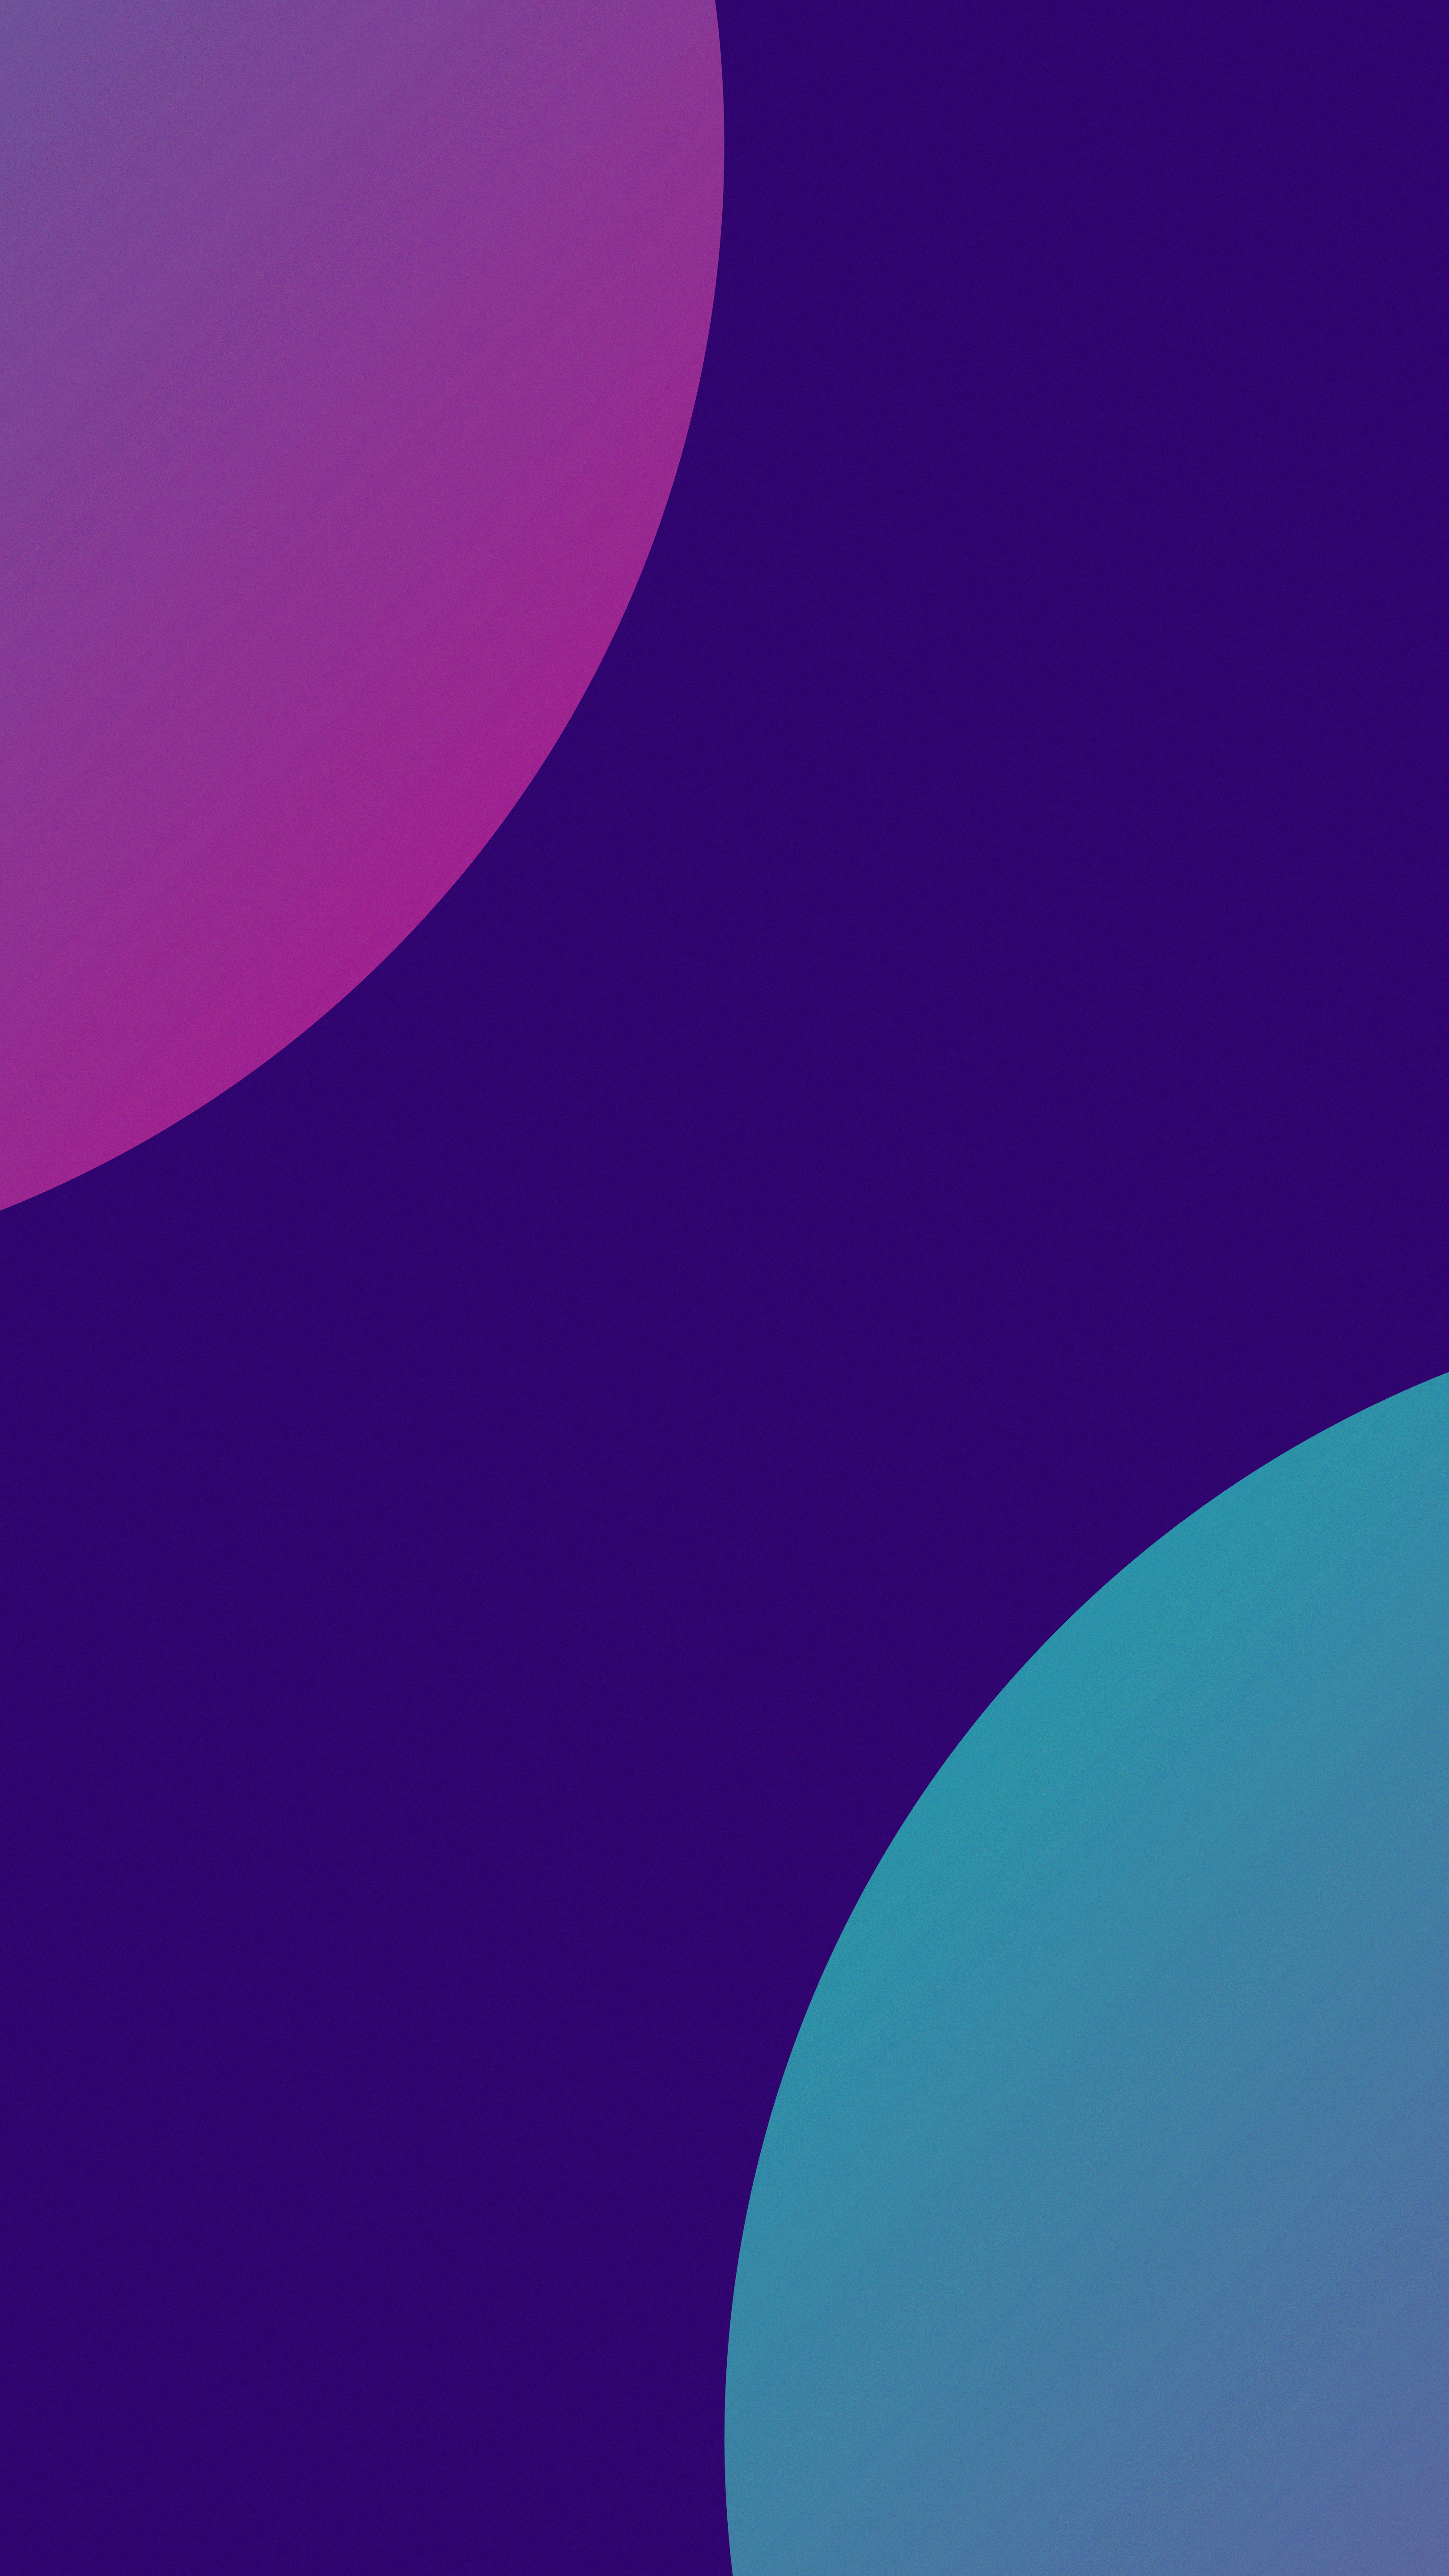 152474 descargar imagen minimalismo, violeta, abstracción, azul, líneas, lineas, púrpura, liso, fluido: fondos de pantalla y protectores de pantalla gratis